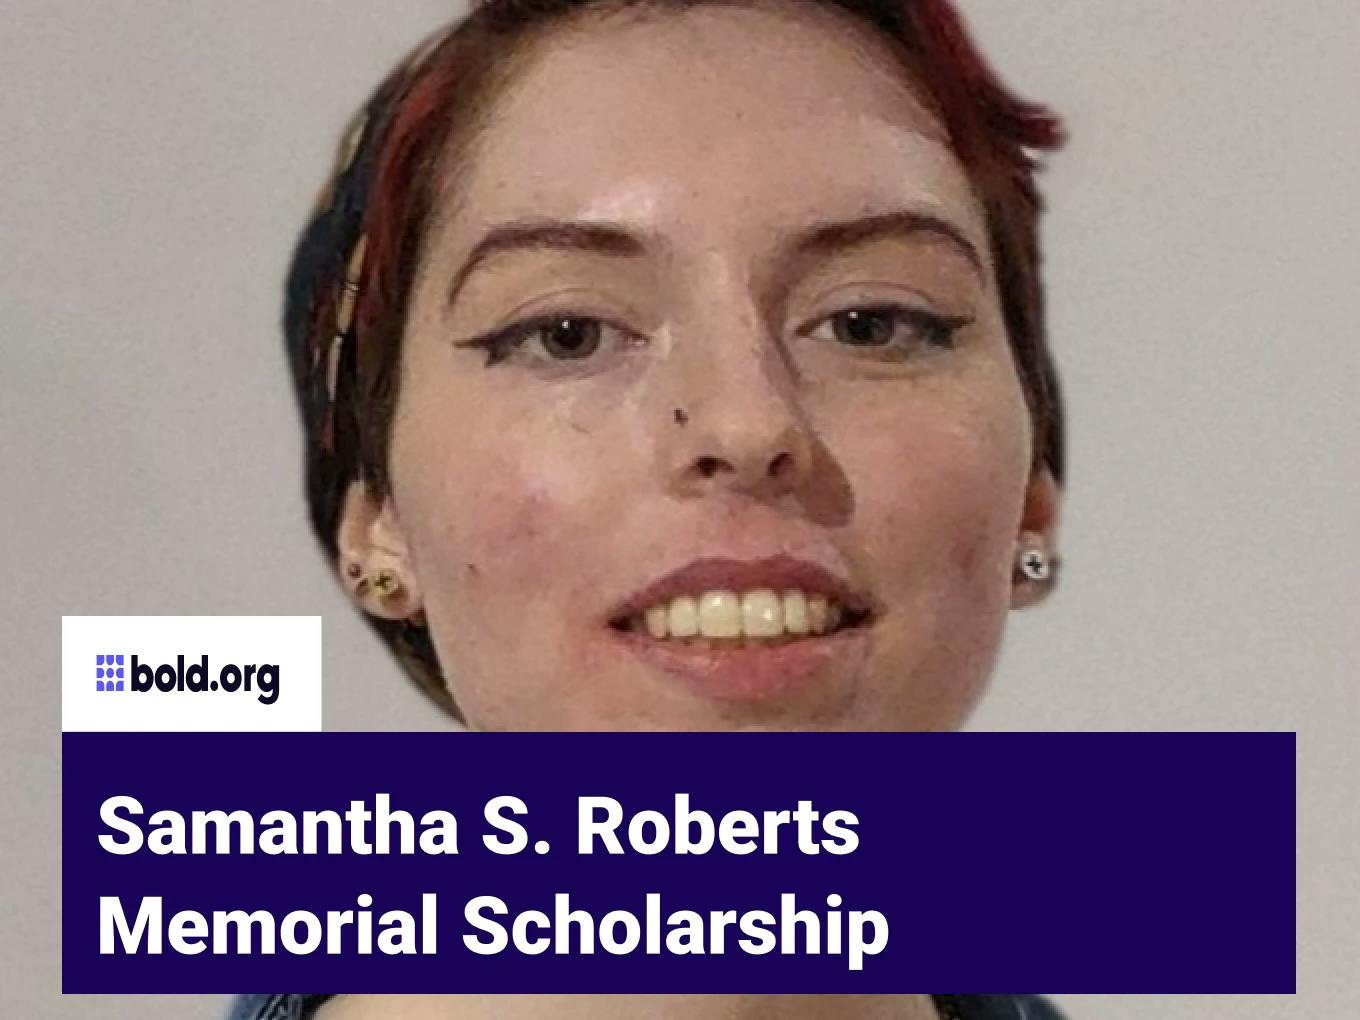 Samantha S. Roberts Memorial Scholarship